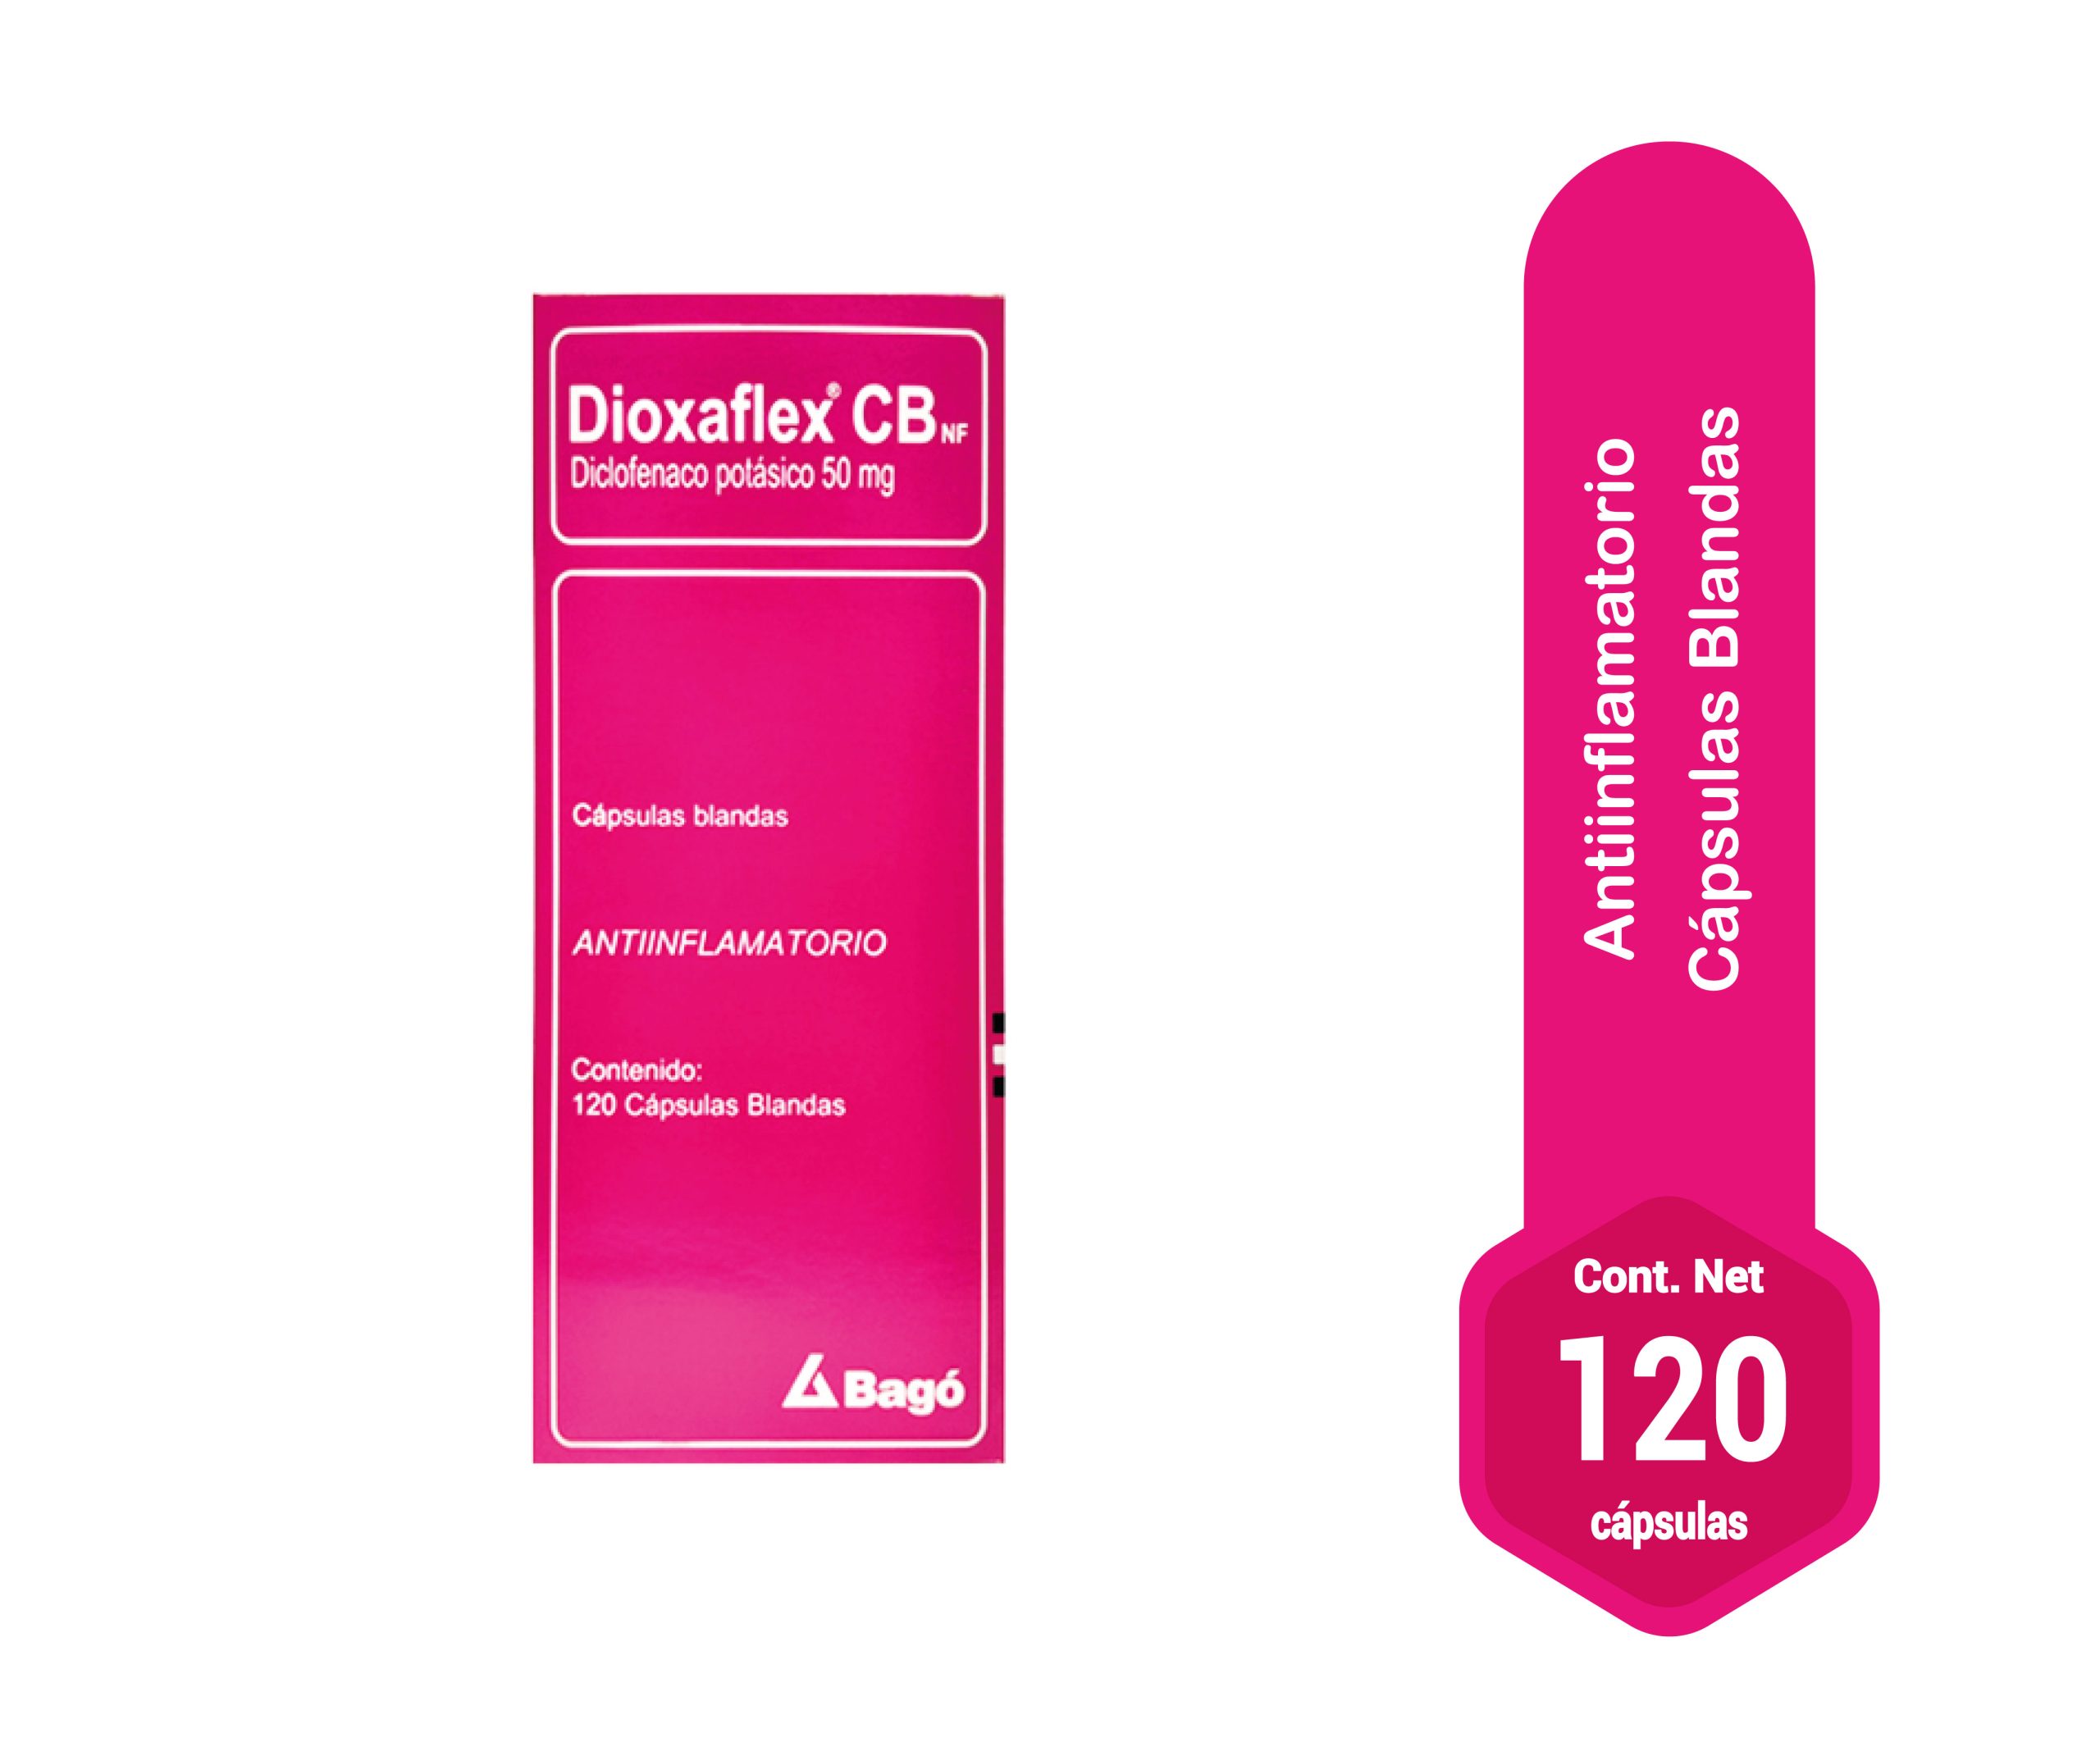 dioxaflex cb nf 120 capsulas